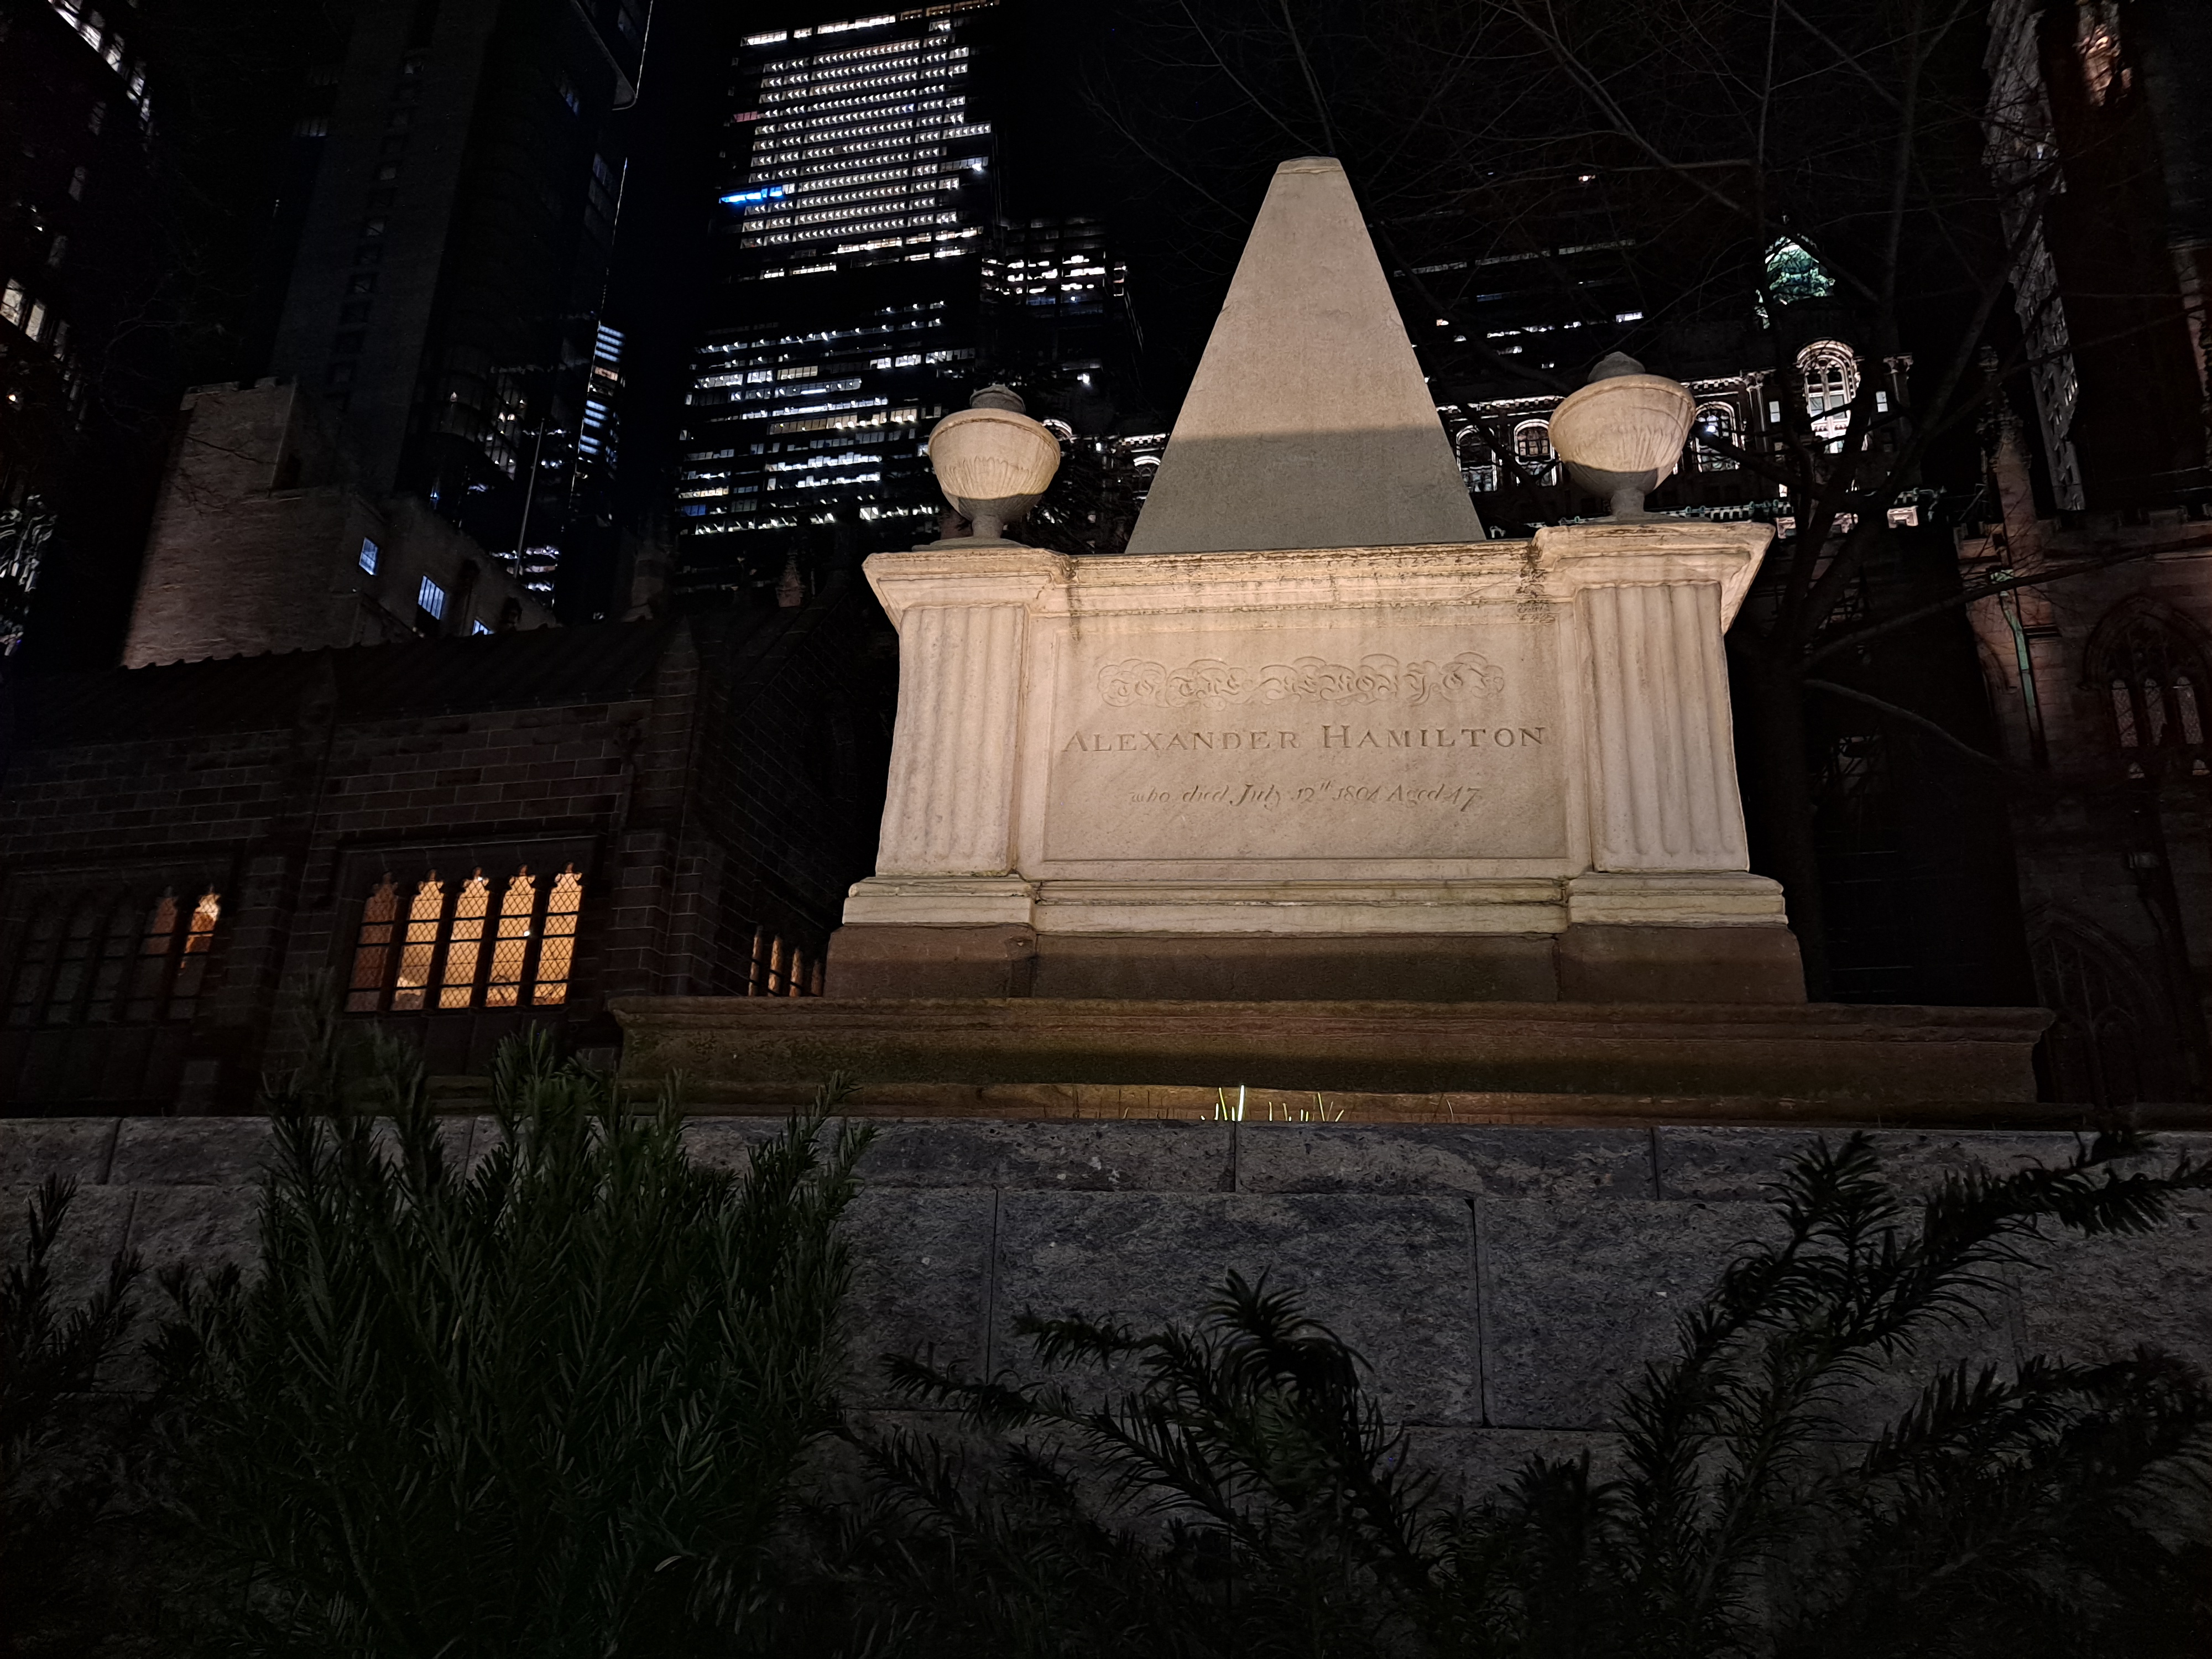 Alexander Hamilton's Grave at night, March 2022